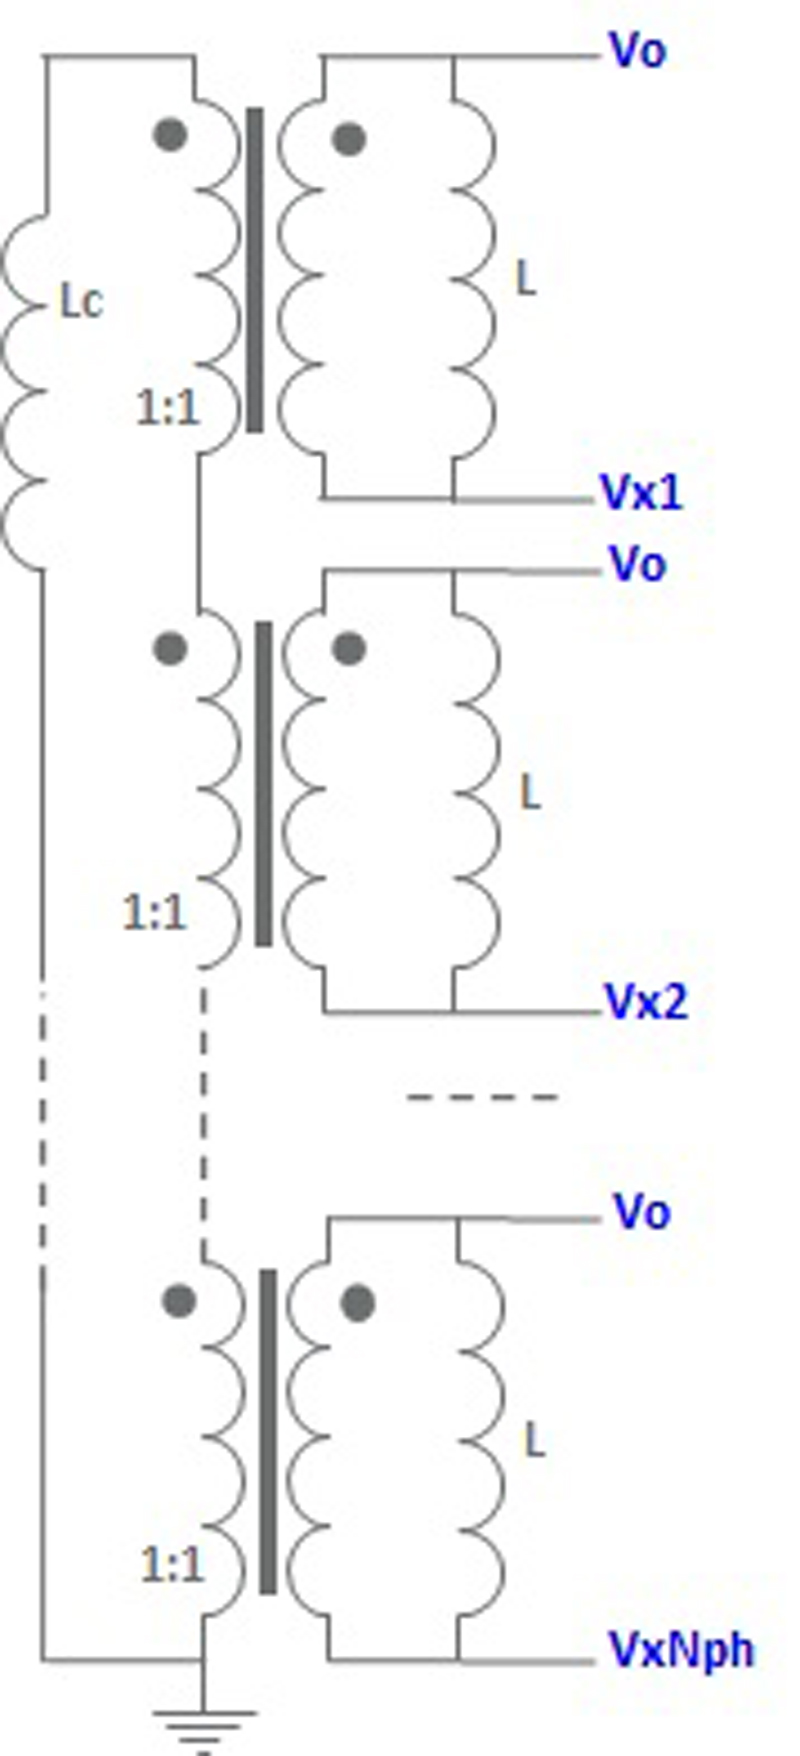 TLVR High Voltage Considerations